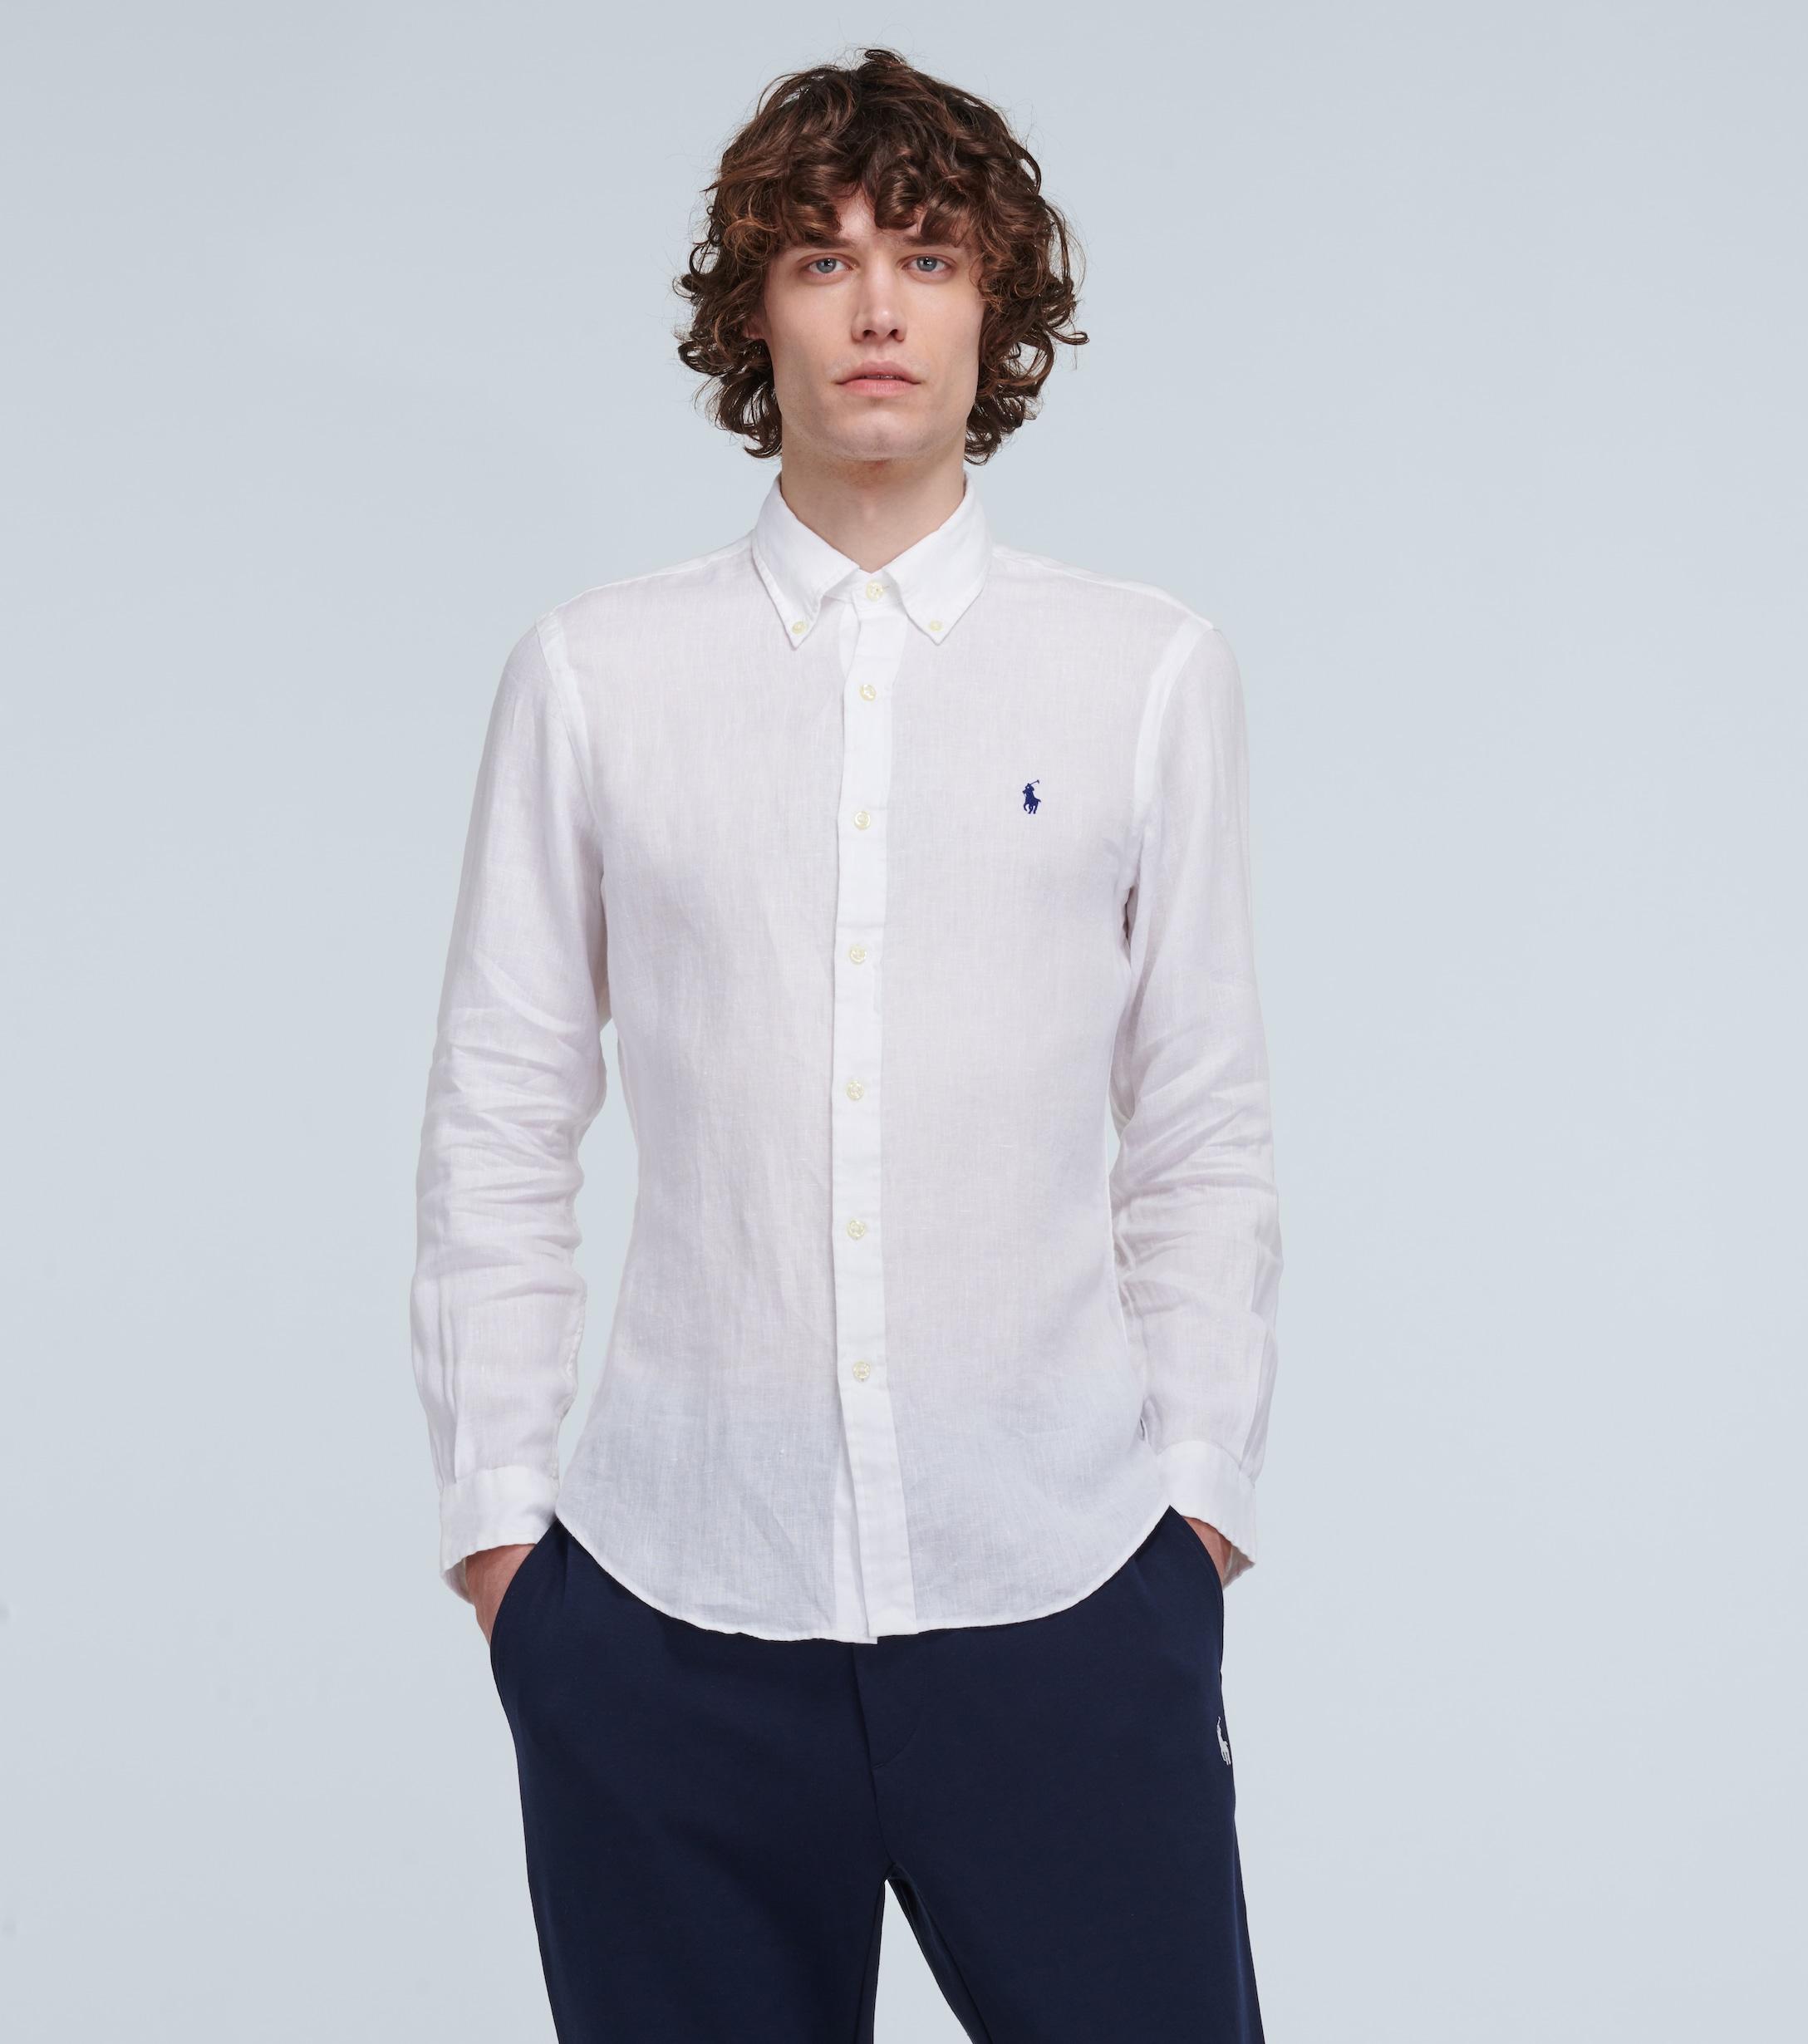 Polo Ralph Lauren Slim-fit Linen Shirt in White for Men - Save 11% - Lyst